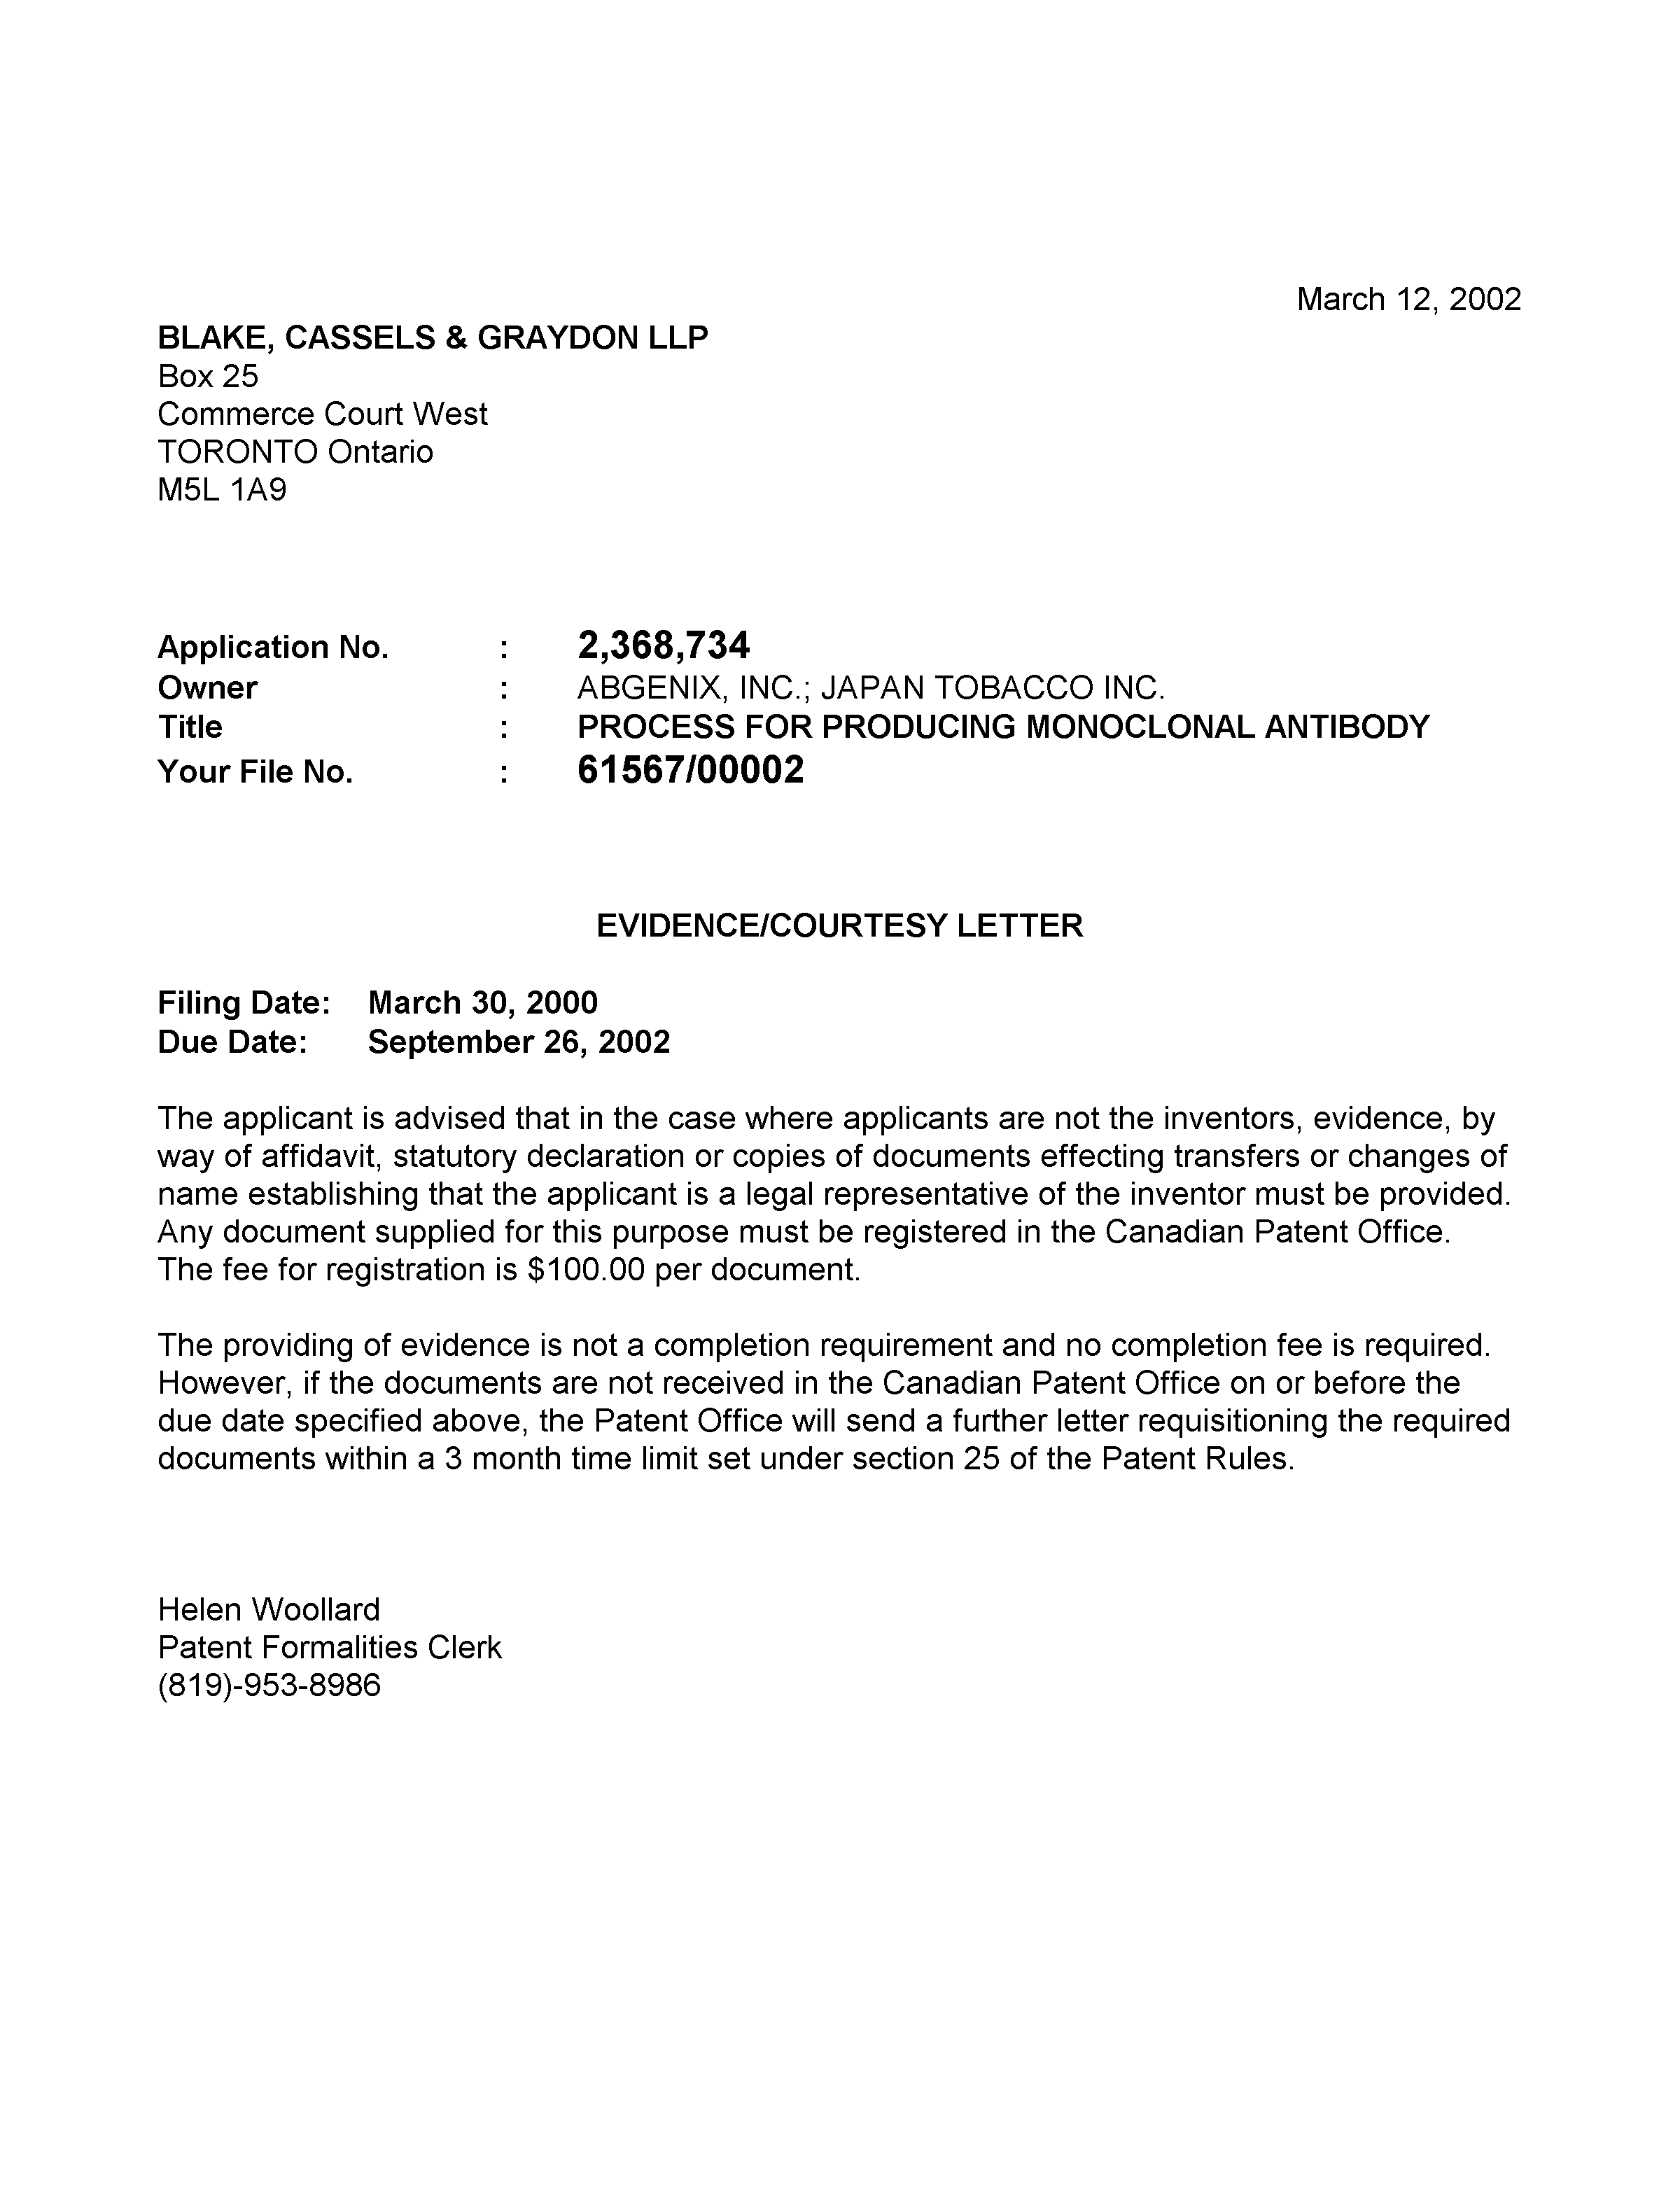 Canadian Patent Document 2368734. Correspondence 20020307. Image 1 of 1